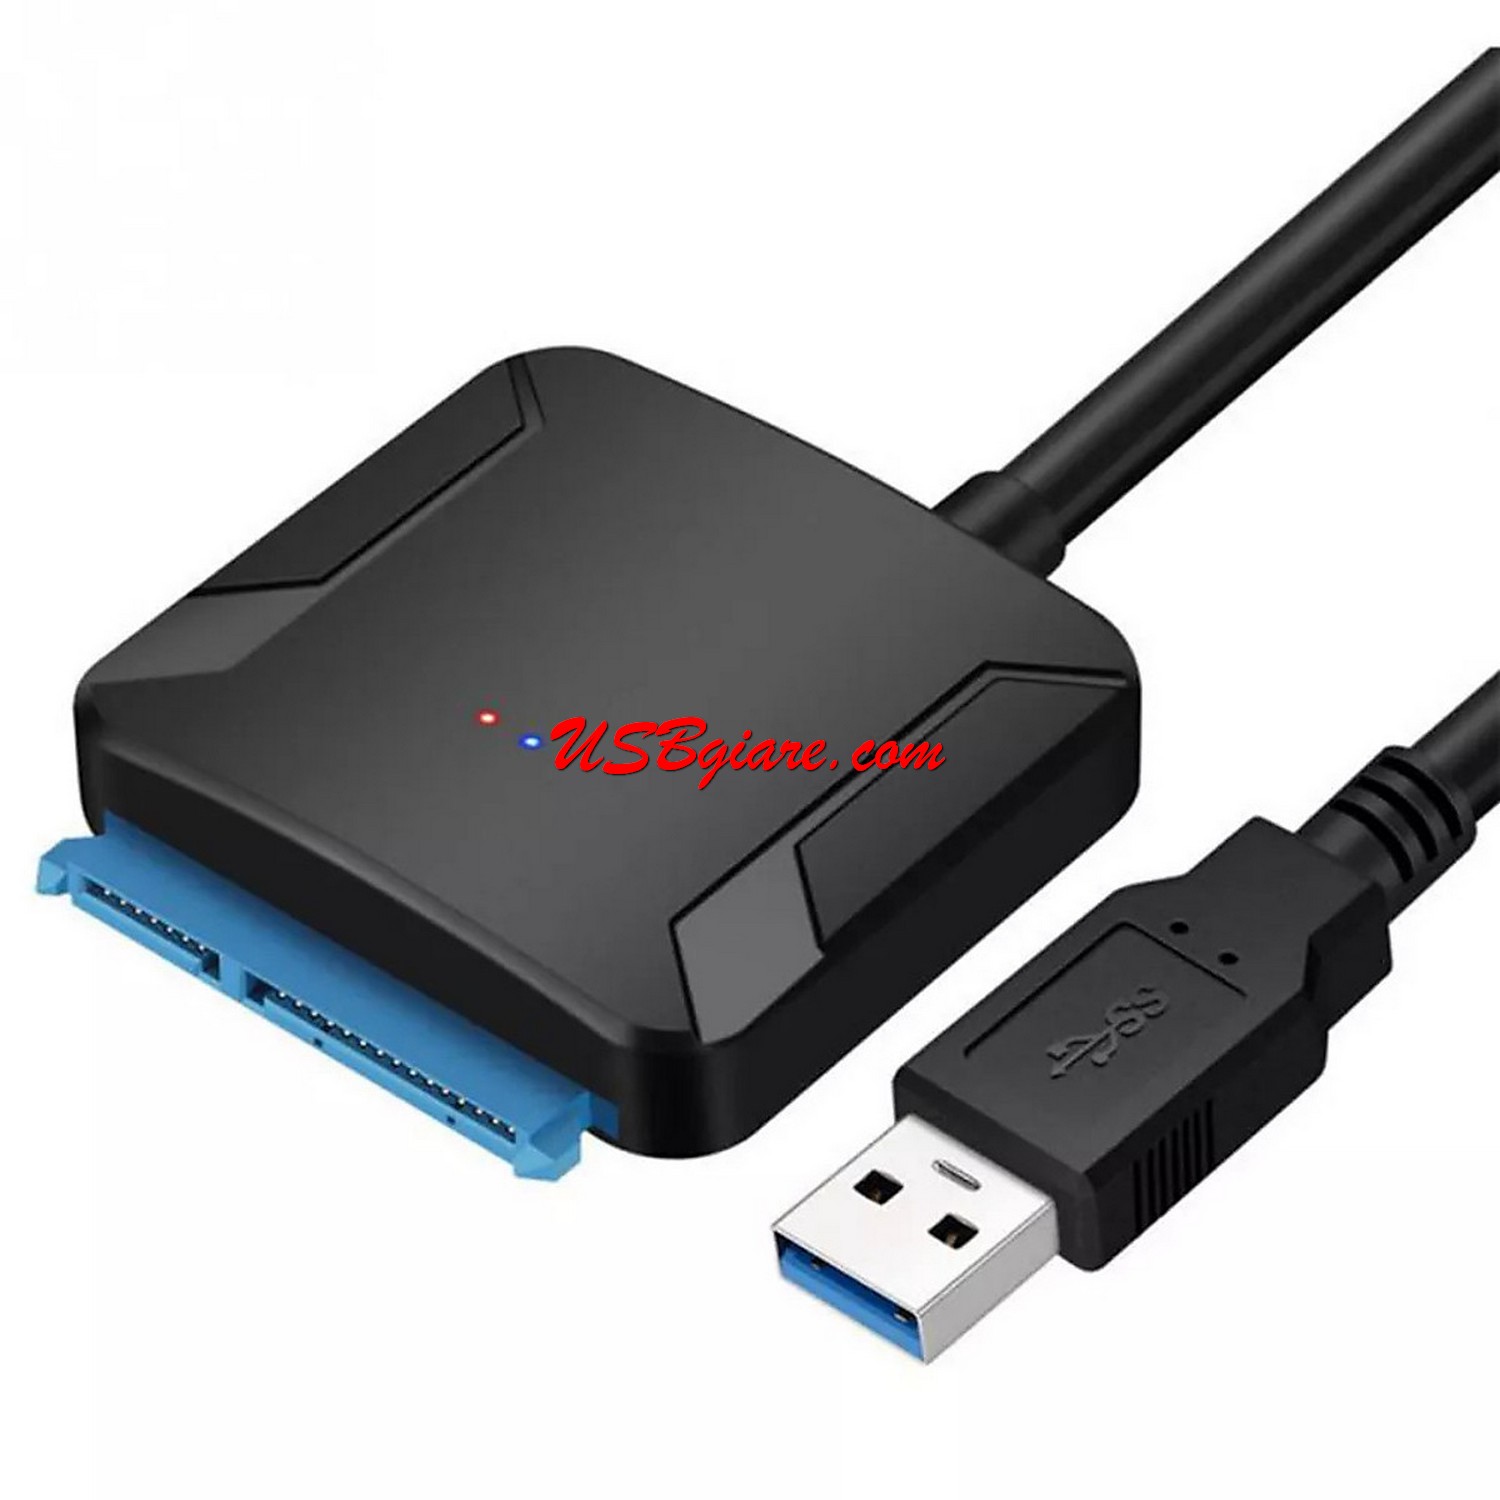 Bộ Chuyển Đổi Cáp Ổ Cứng USB SATA III Đen (3.0) 【USBgiare,Com】